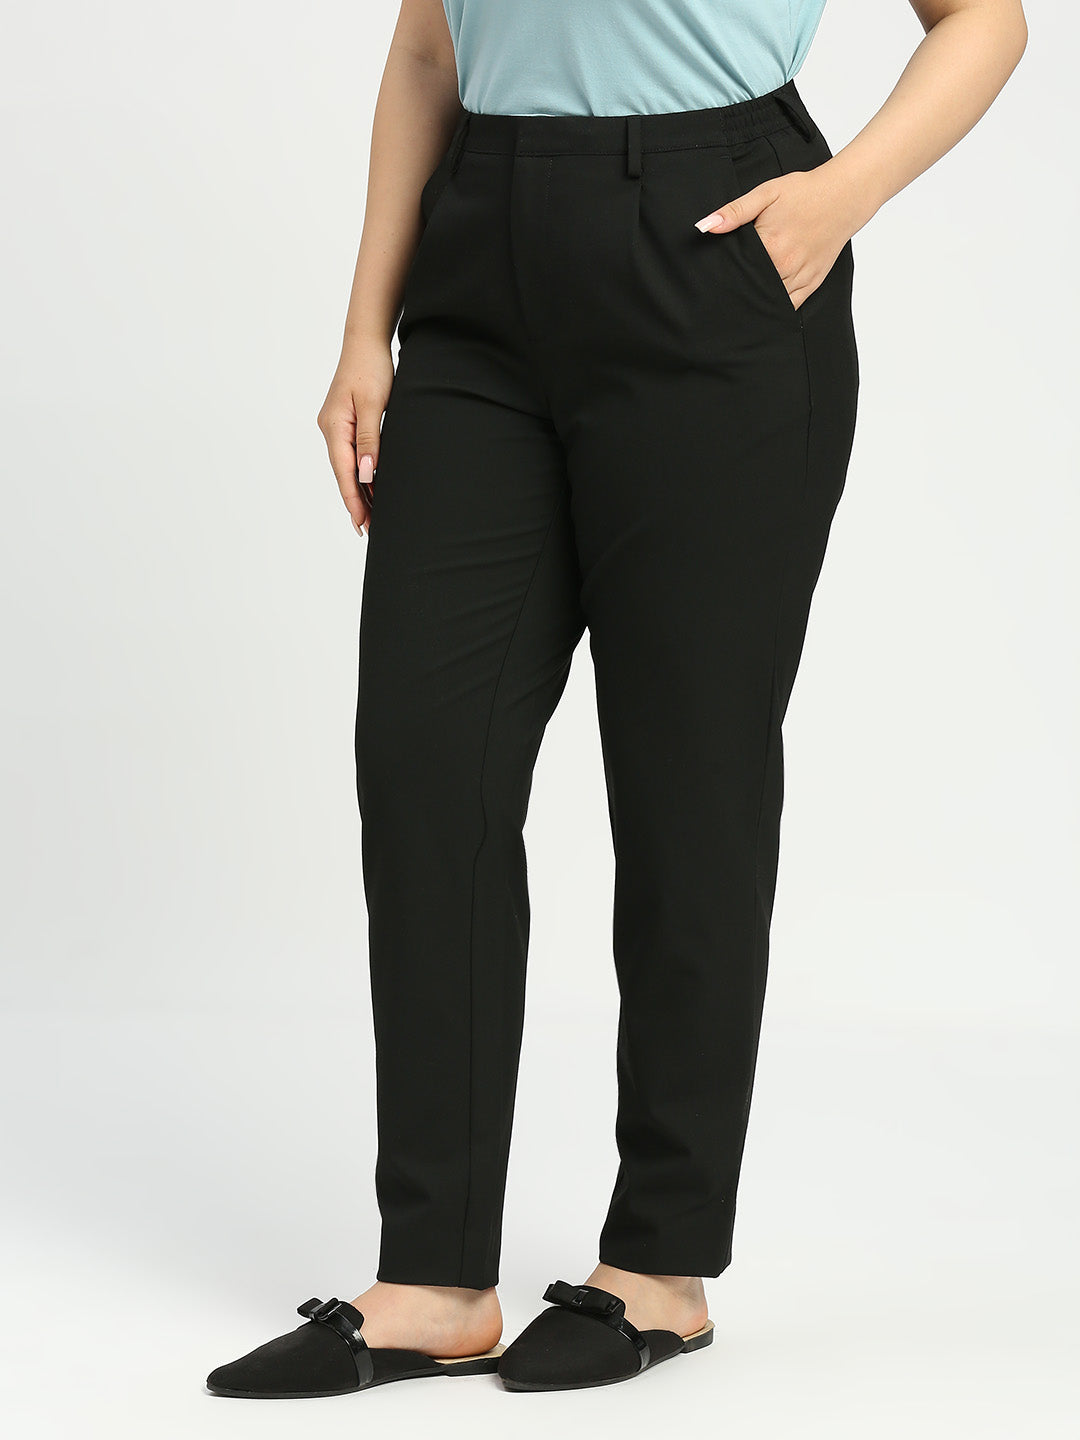 Hyperflex Black Eclectic Trouser - For Women